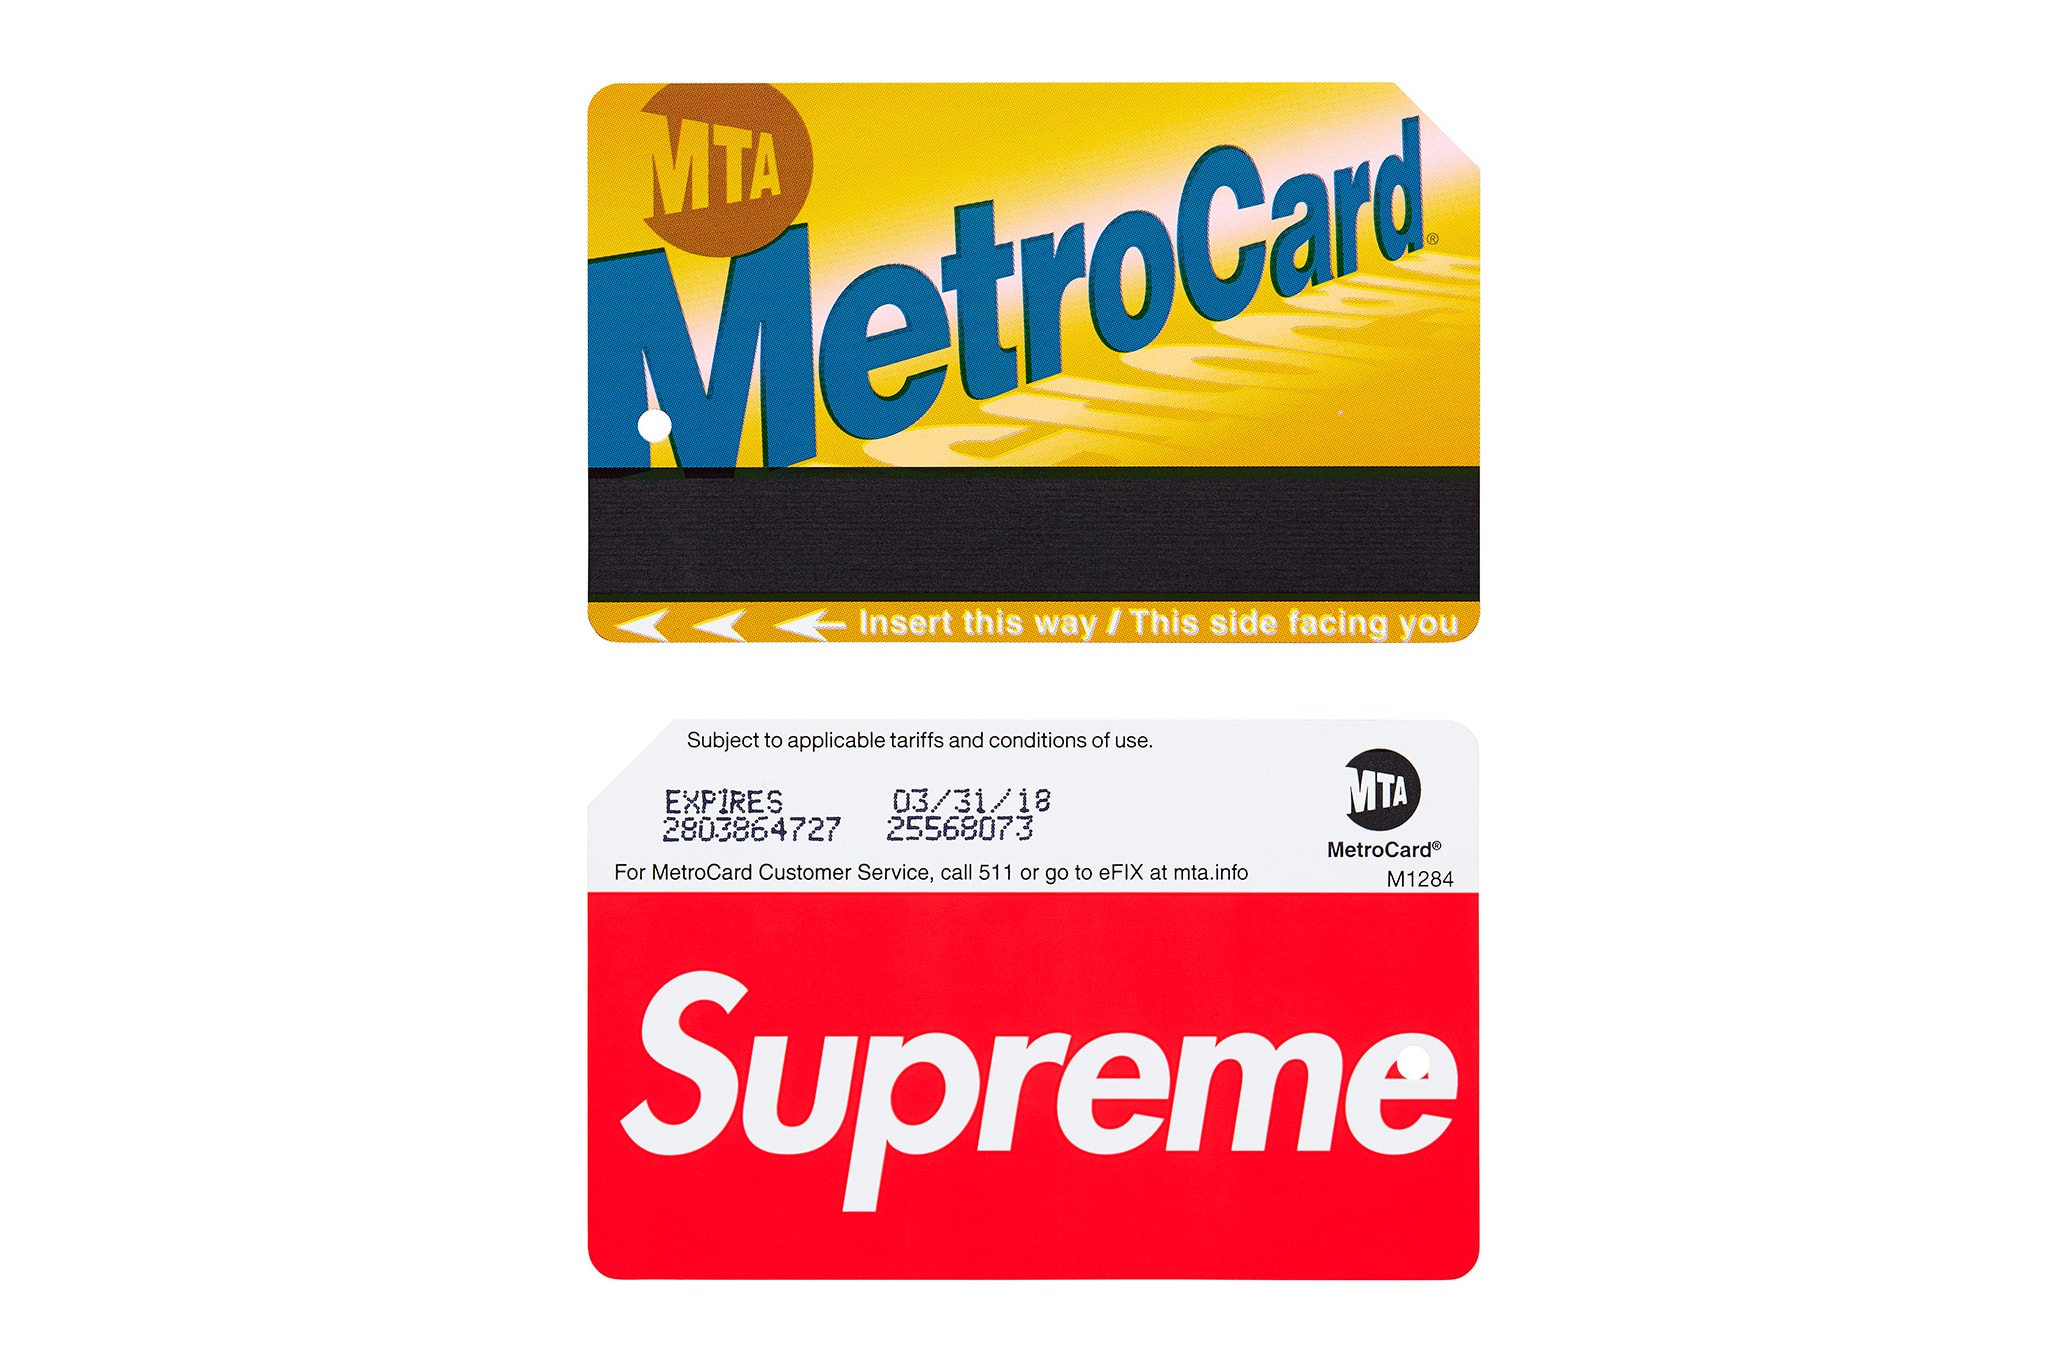 The Supreme MTA MetroCard NYC